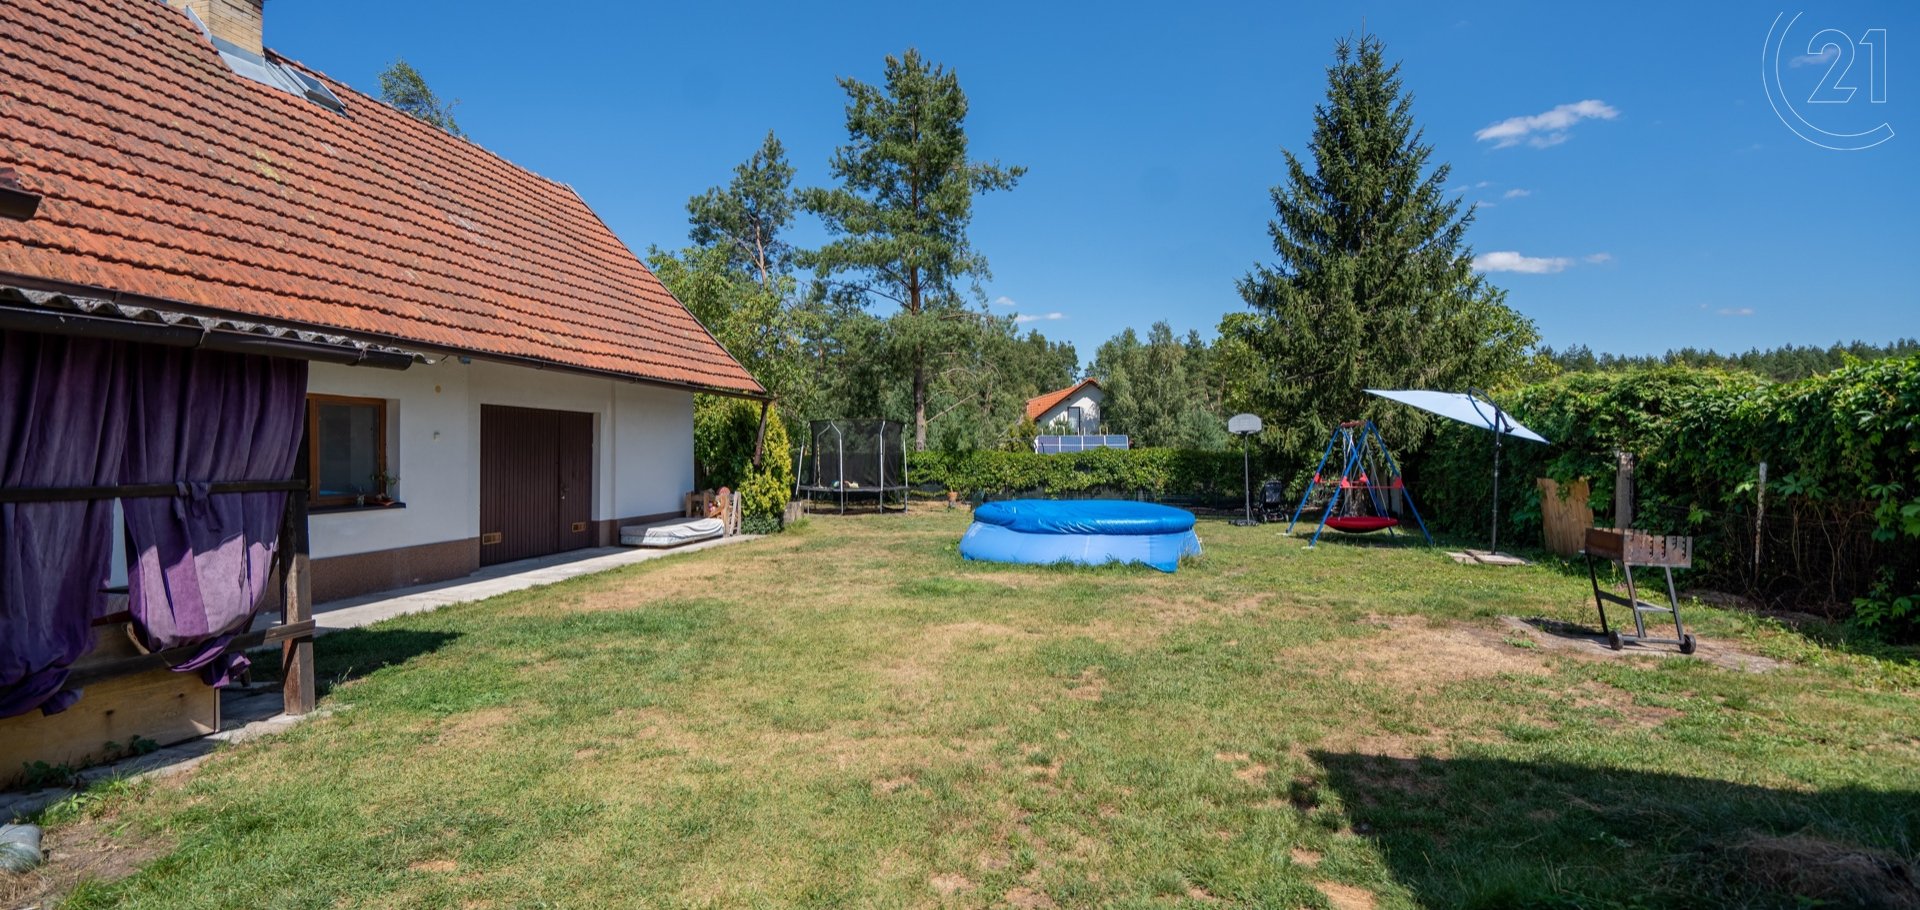 Prodej rodinného domu 130 m², zahrada 500 m², Čermná nad Orlicí